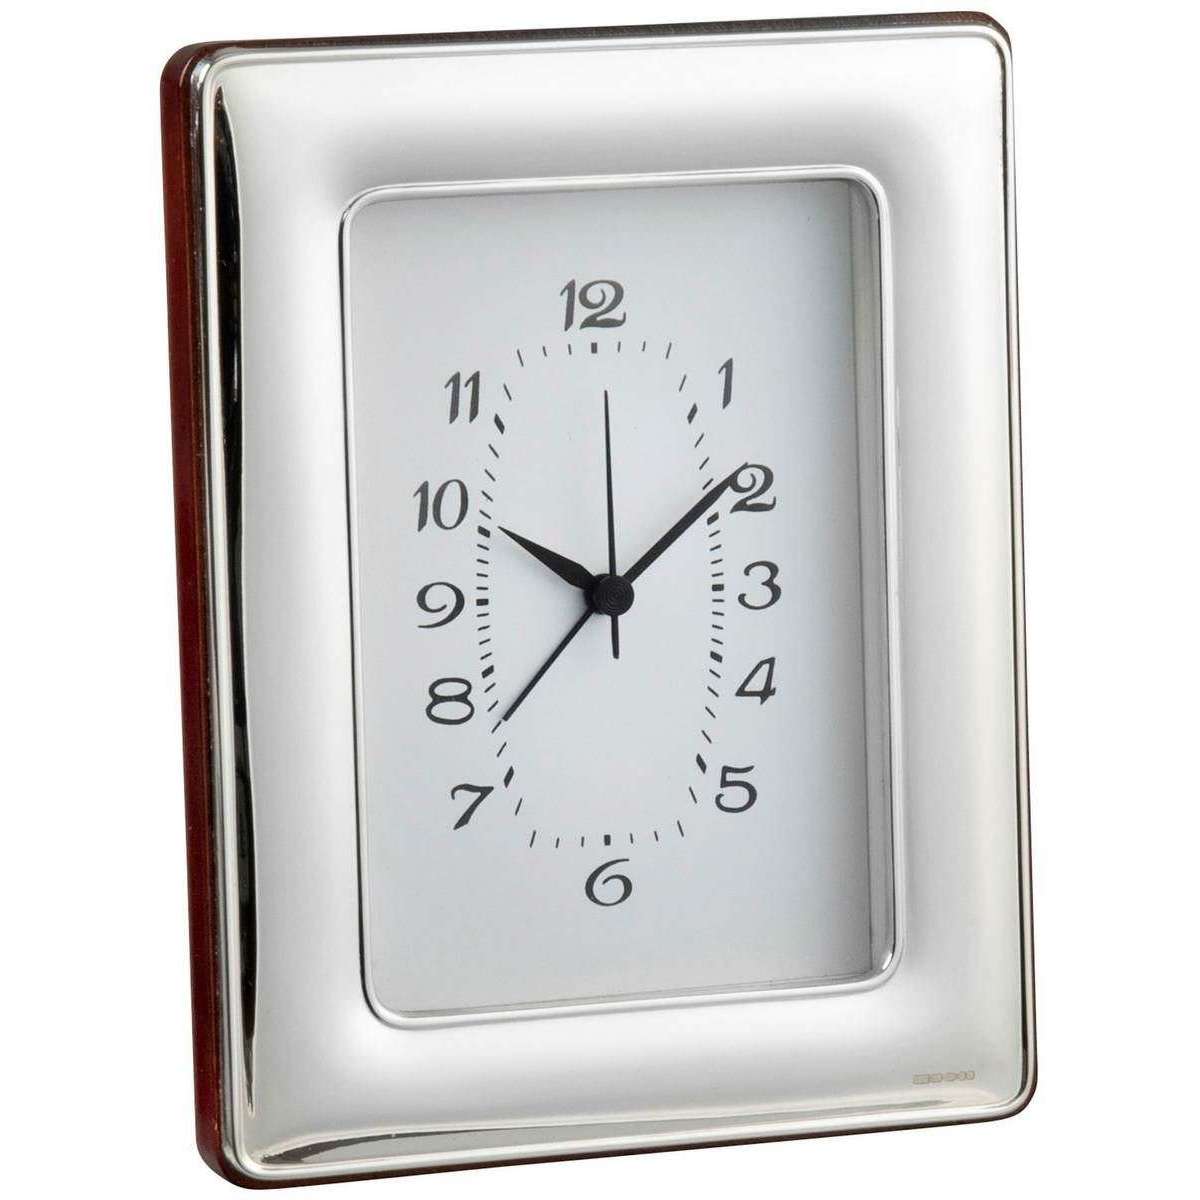 Orton West Large Mantel Clock - Silver